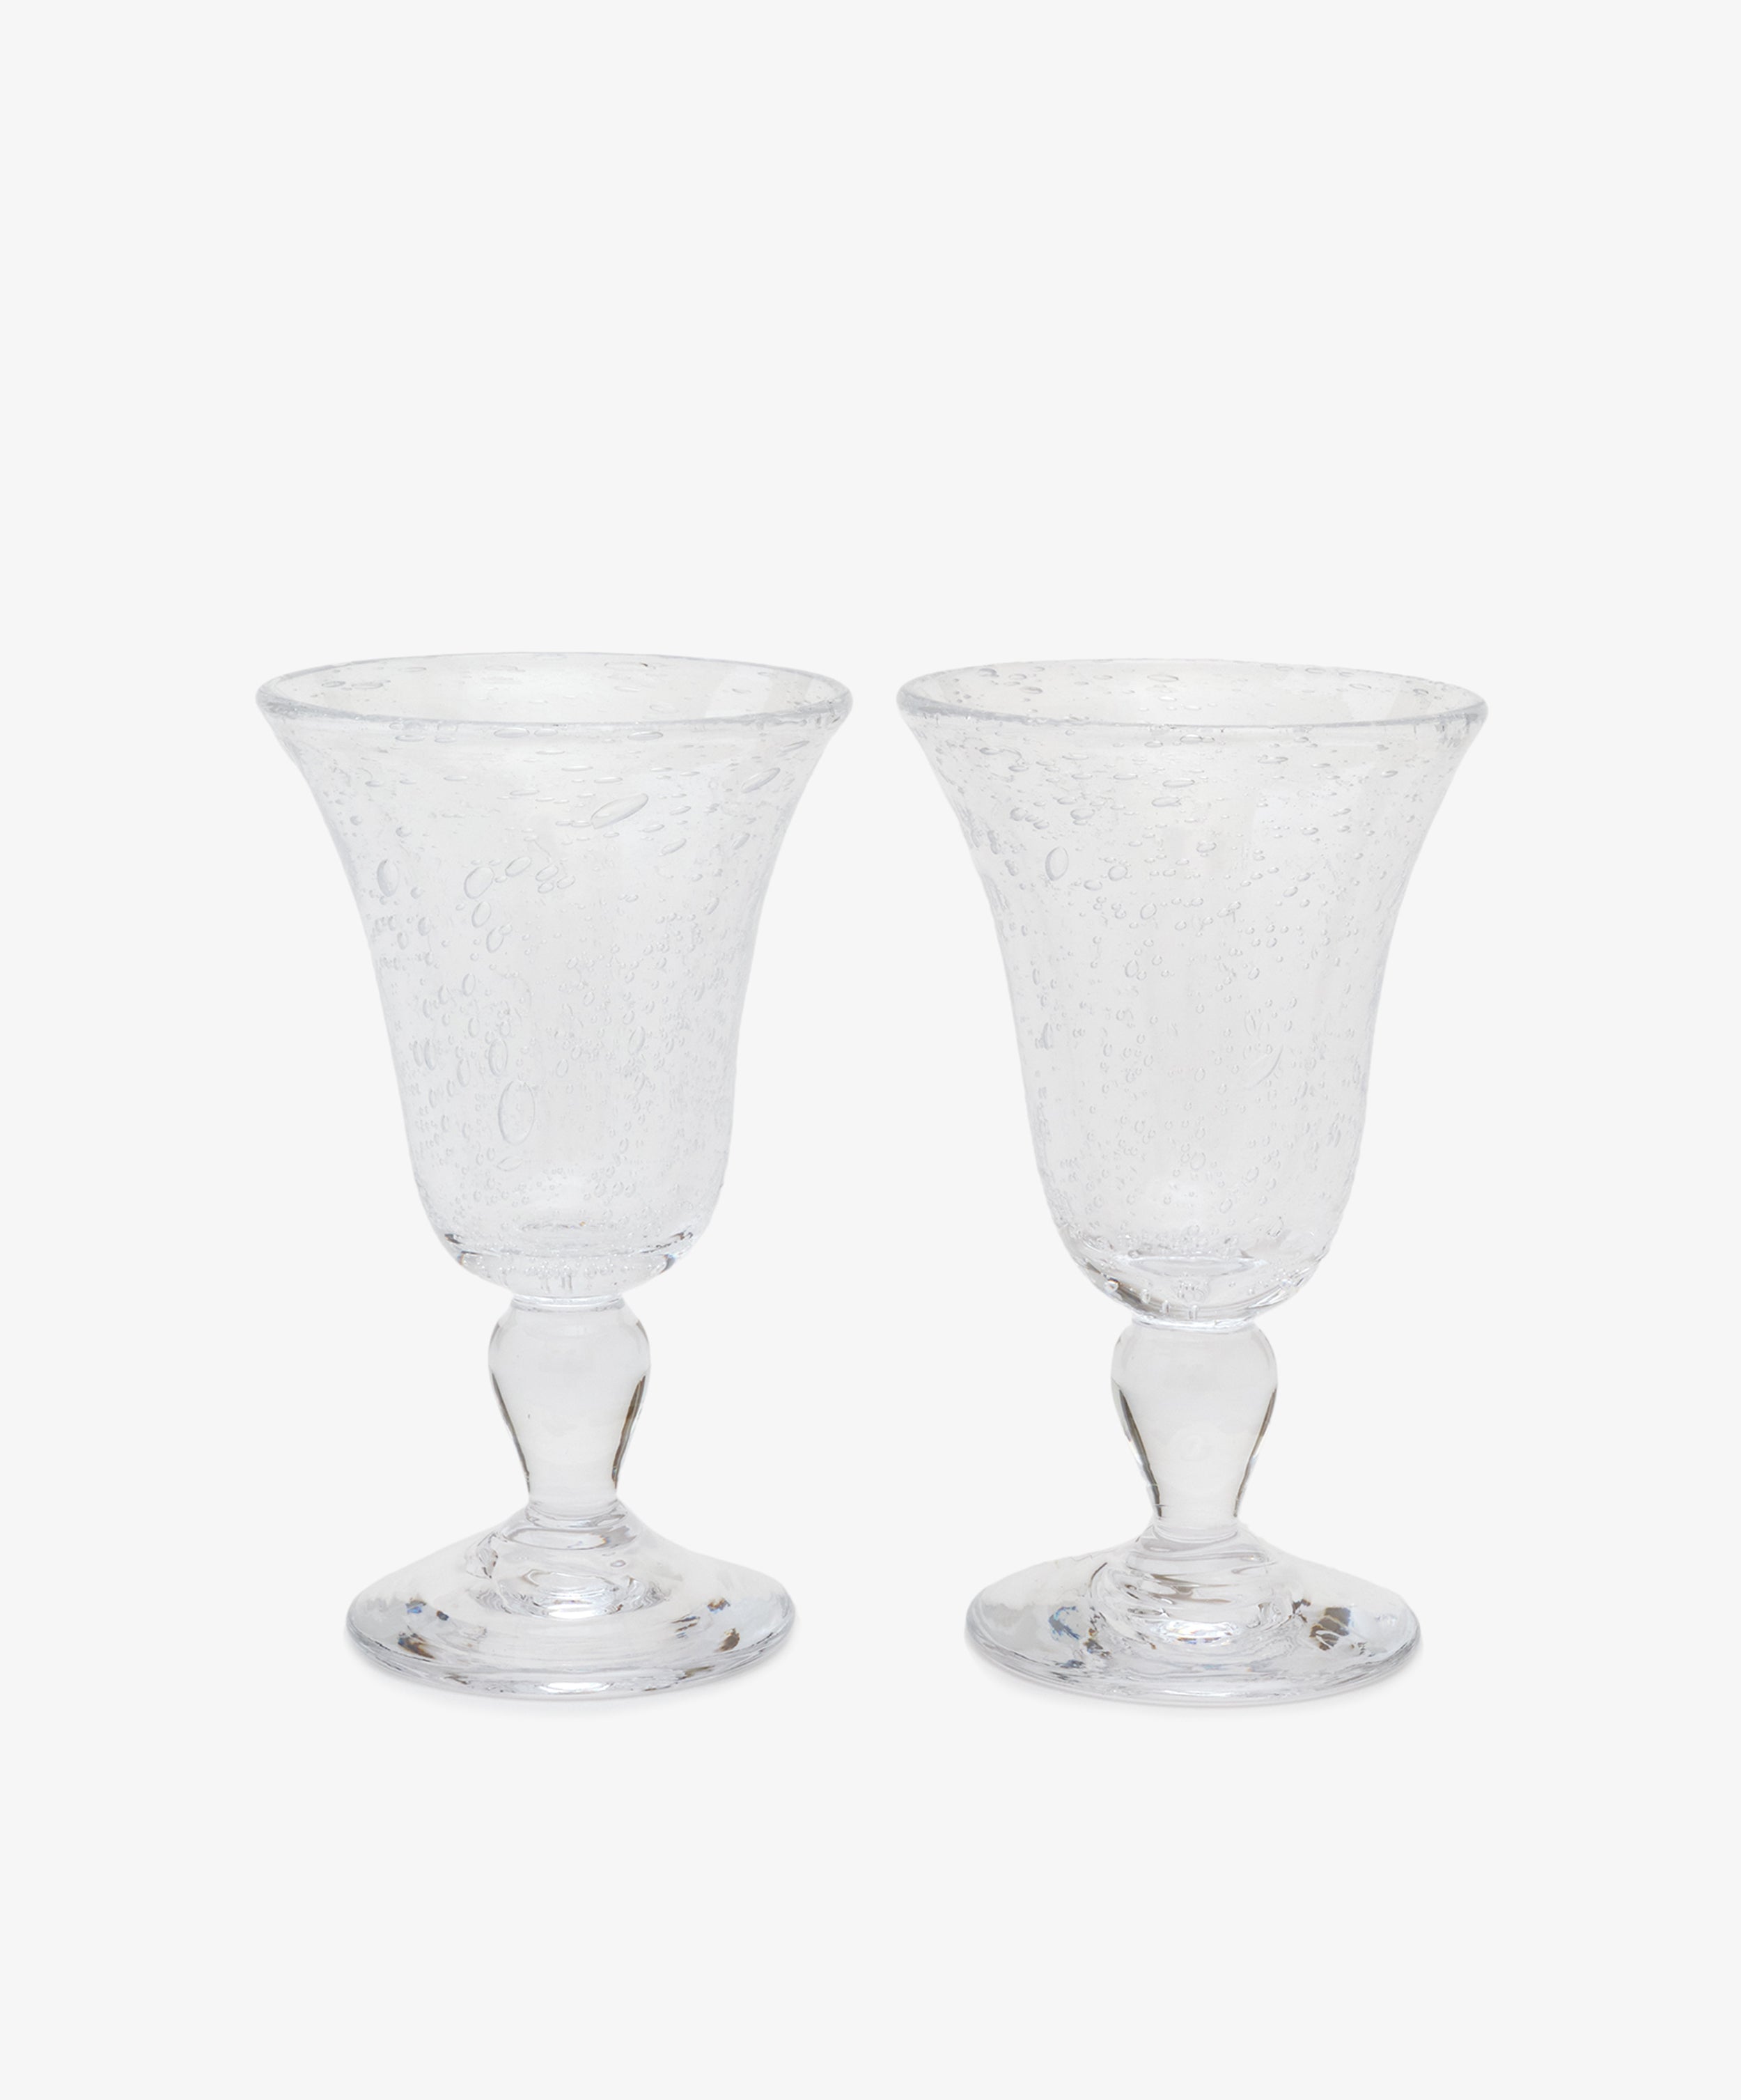 Bubble Wine Glass, Set of 2